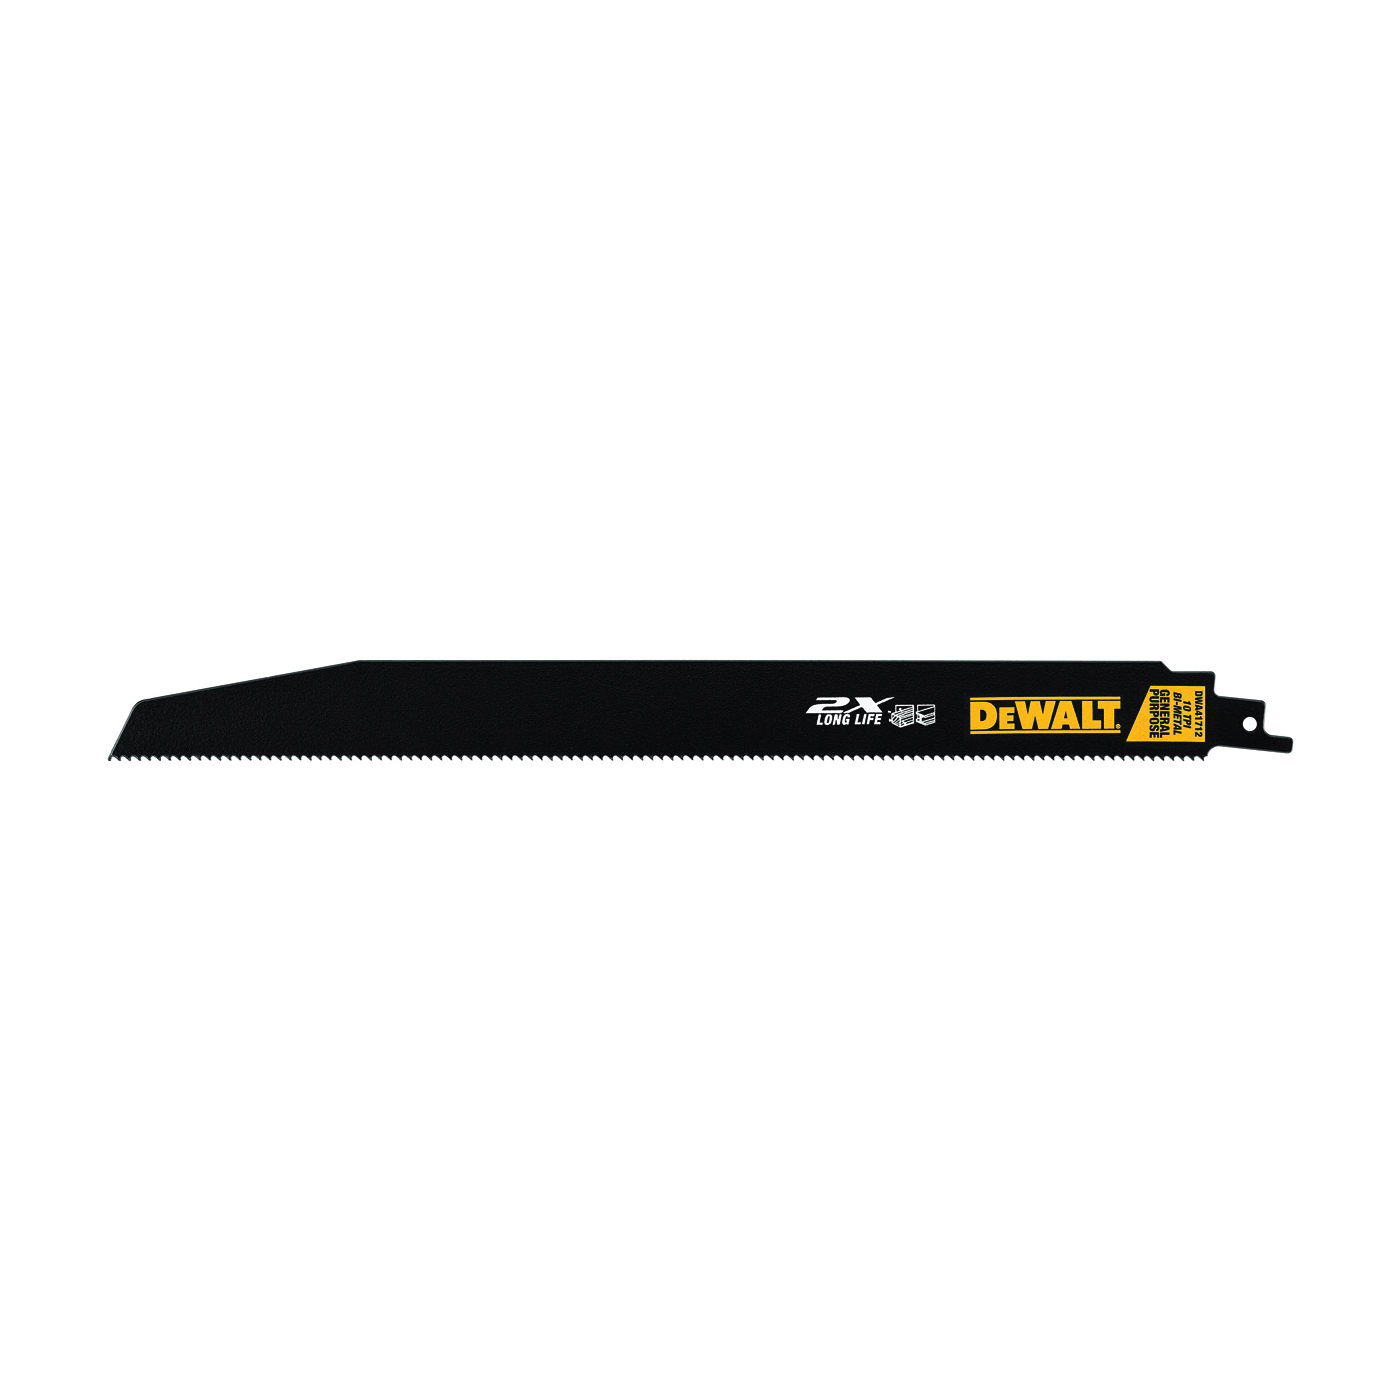 DeWALT DWA41712 Reciprocating Saw Blade, 1 in W, 12 in L, 10 TPI